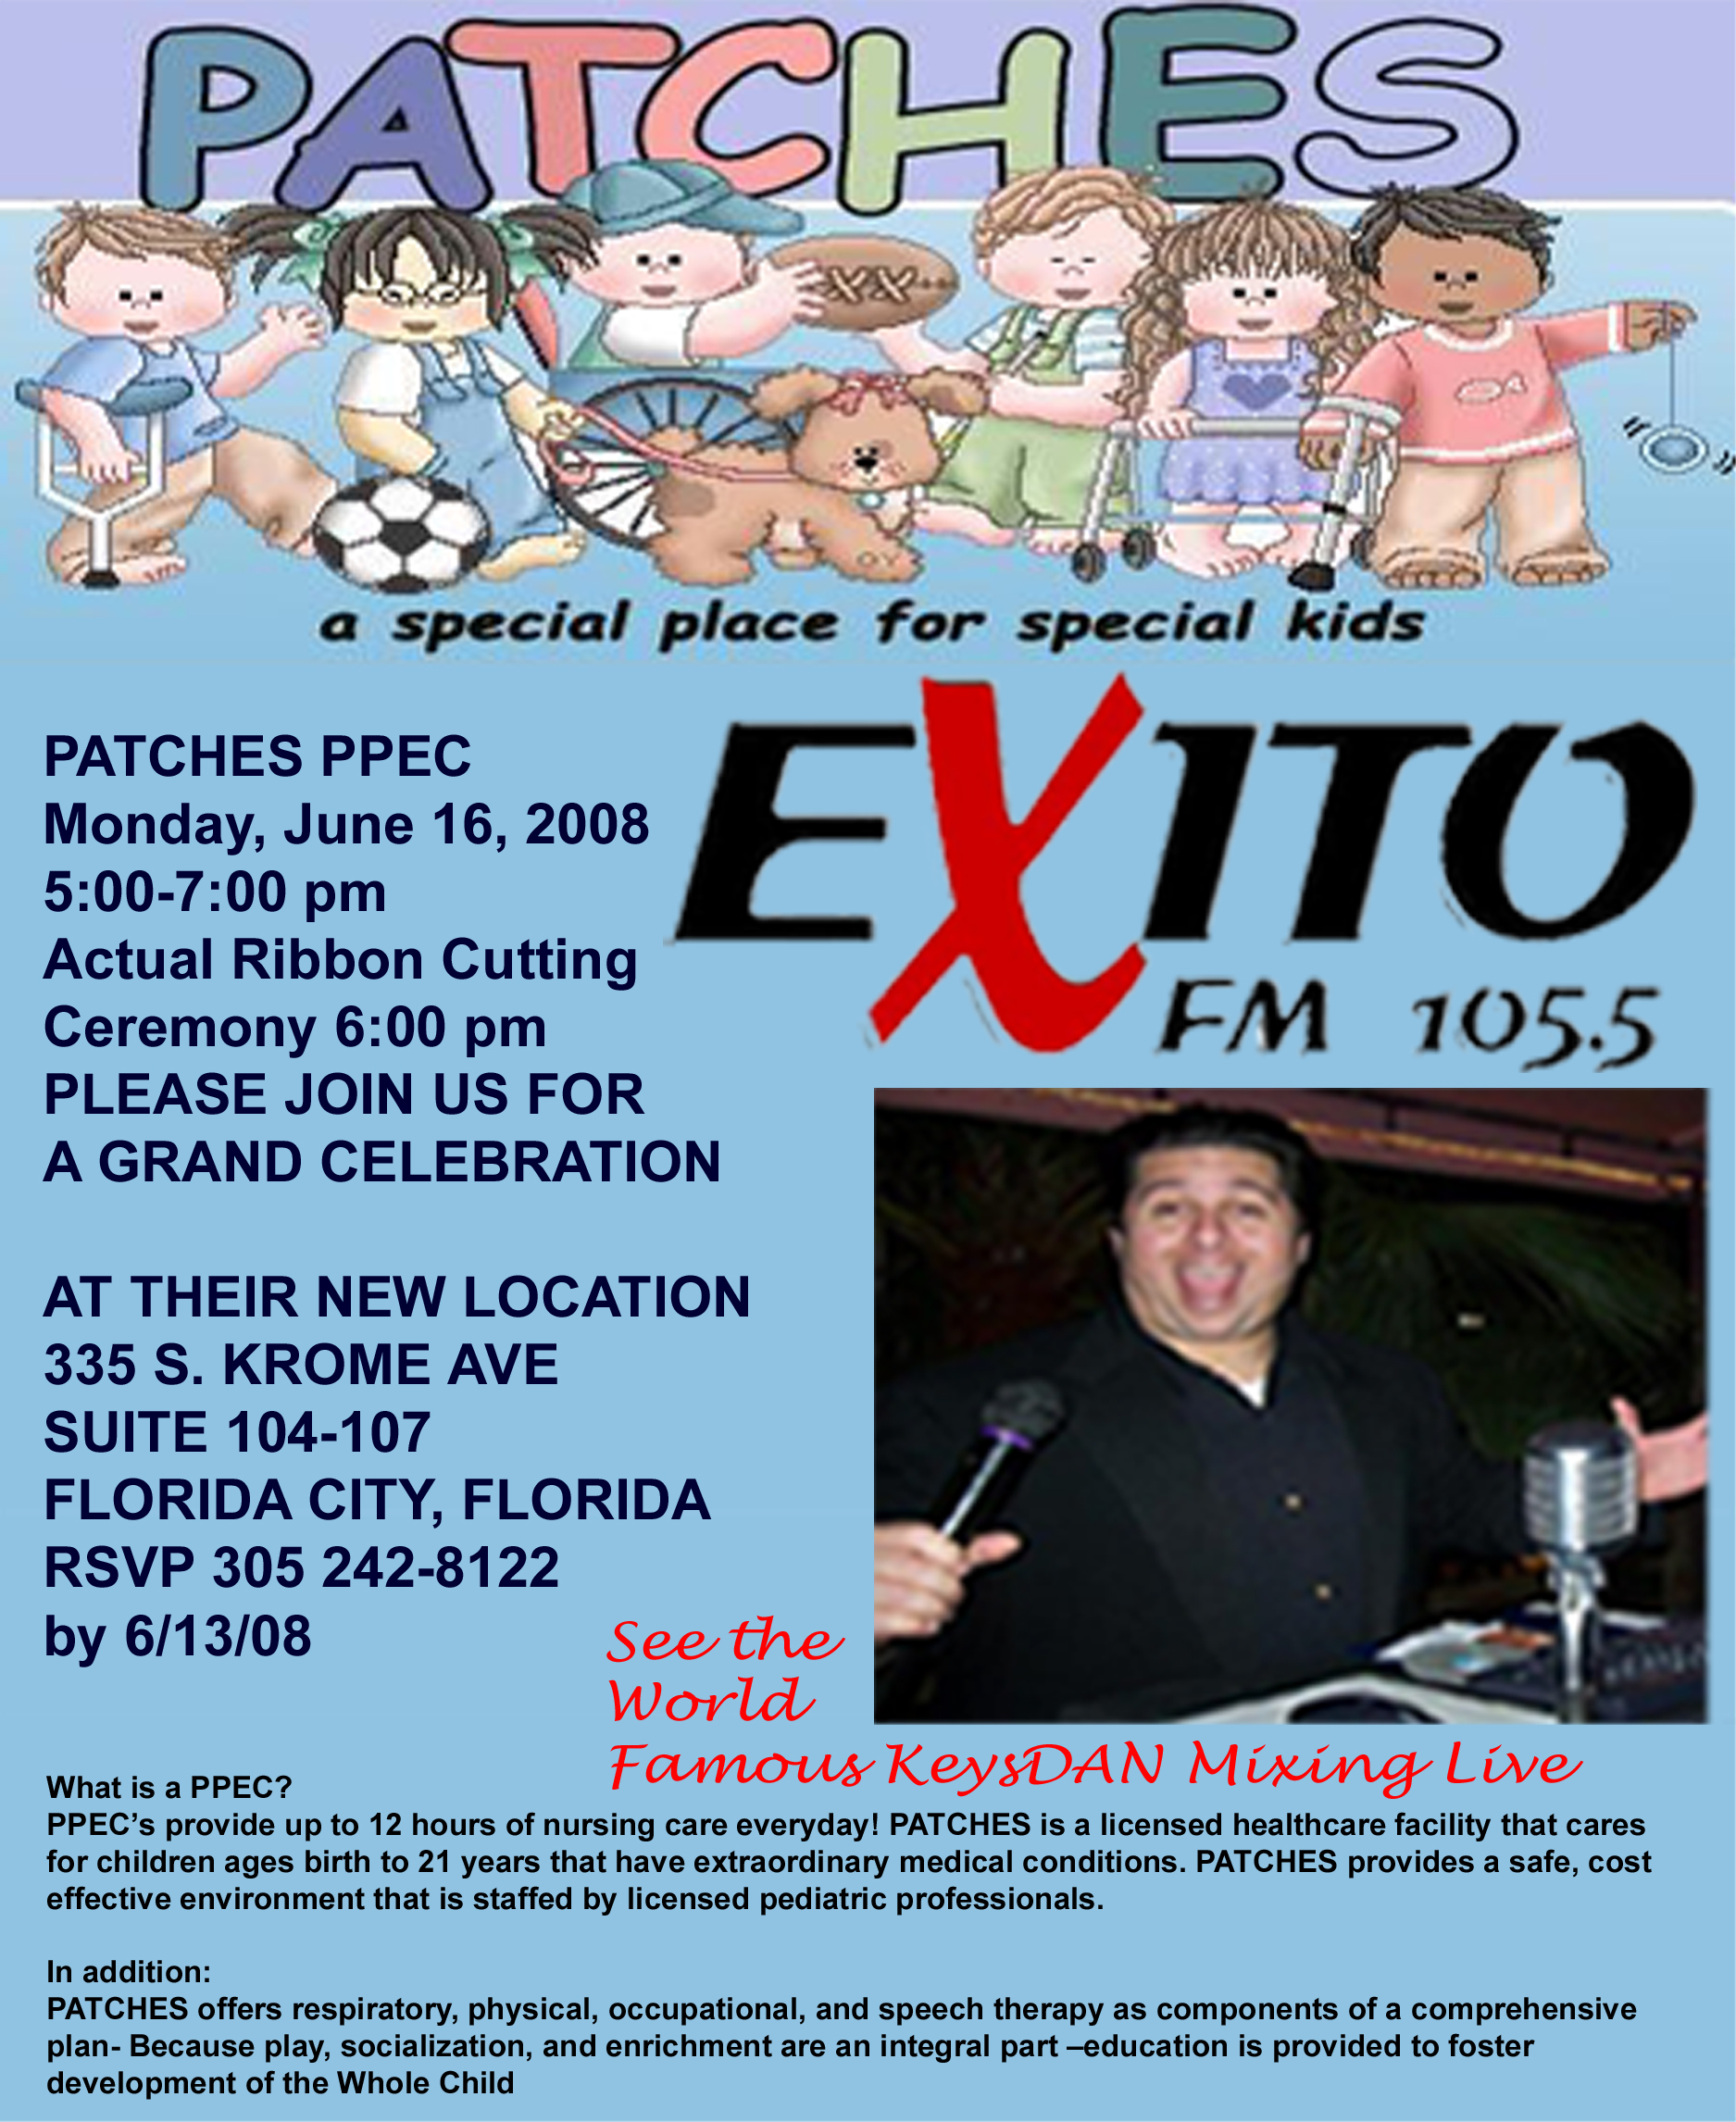 2008-06-16 Patches PPEC Grand Opening Celebration Florida City Florida